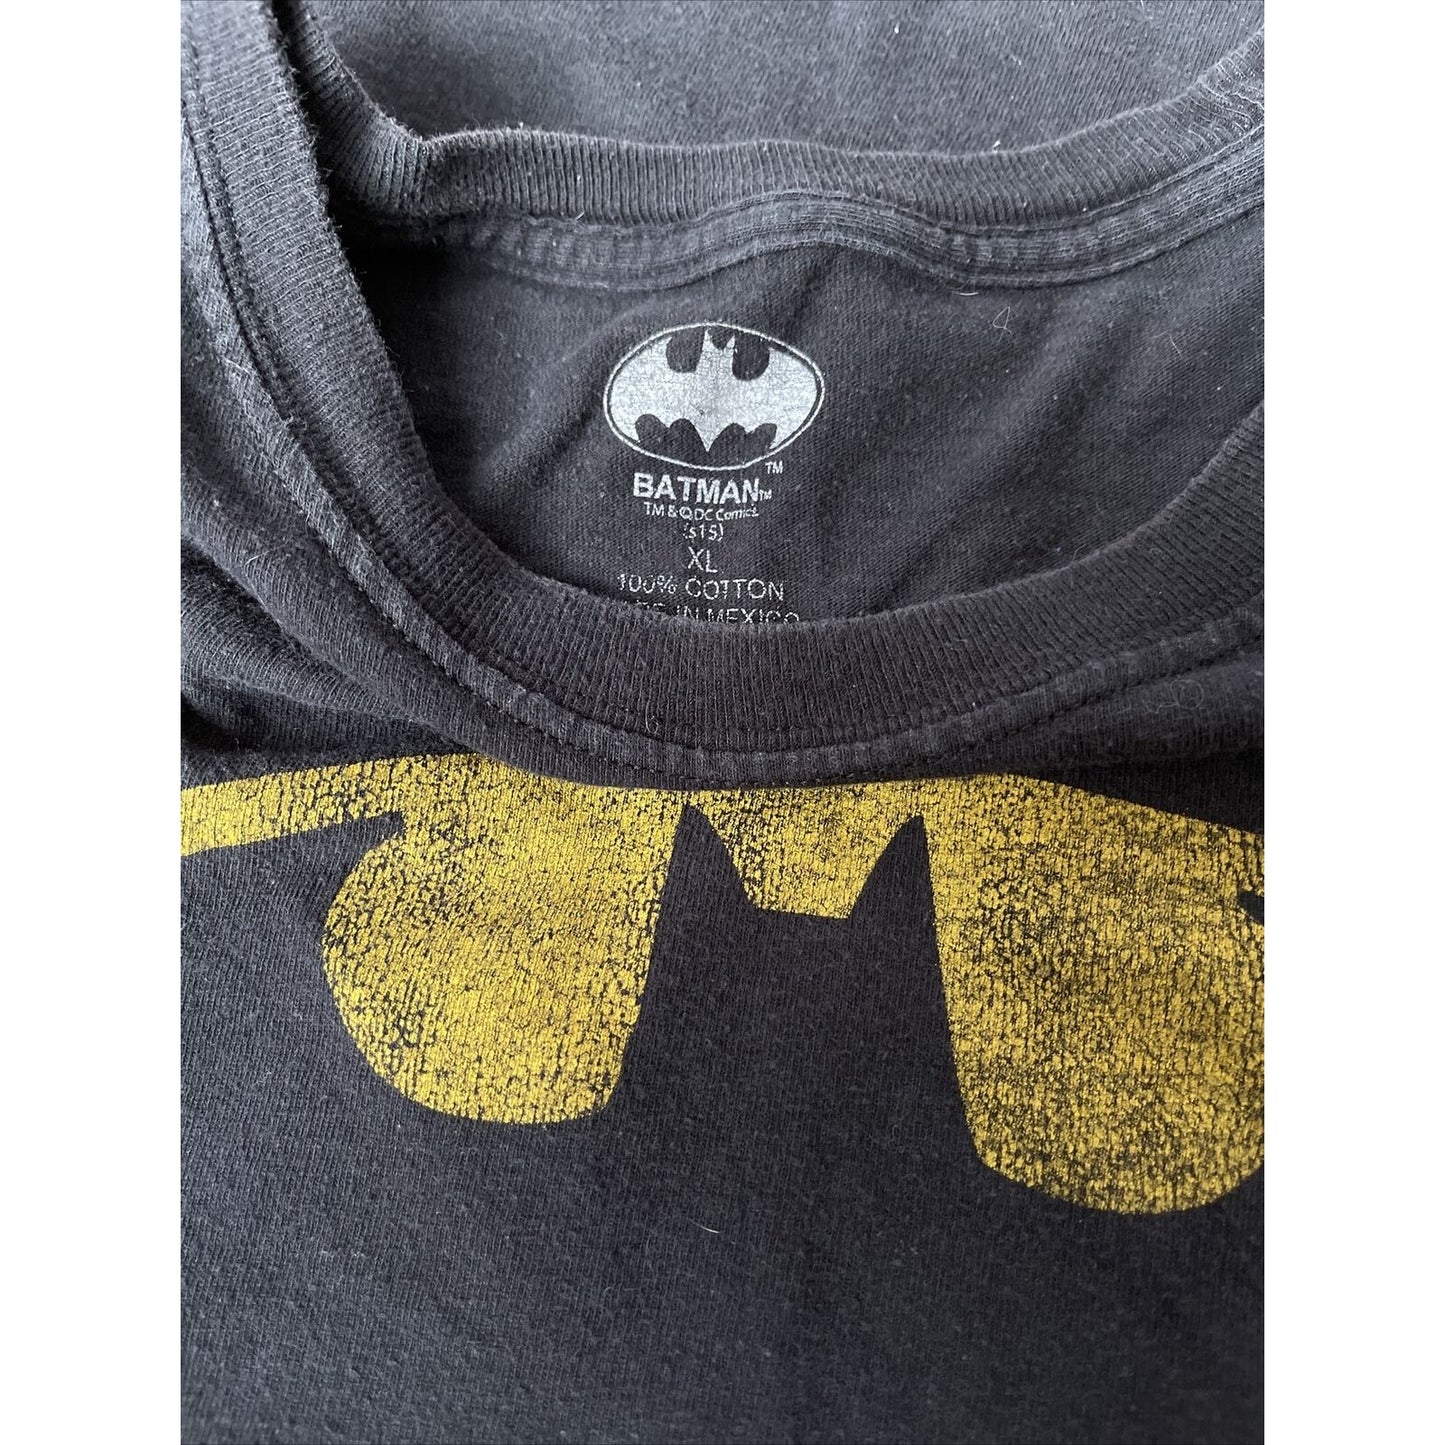 Batman Black XL Cotton T-shirt short sleeve Yellow logo